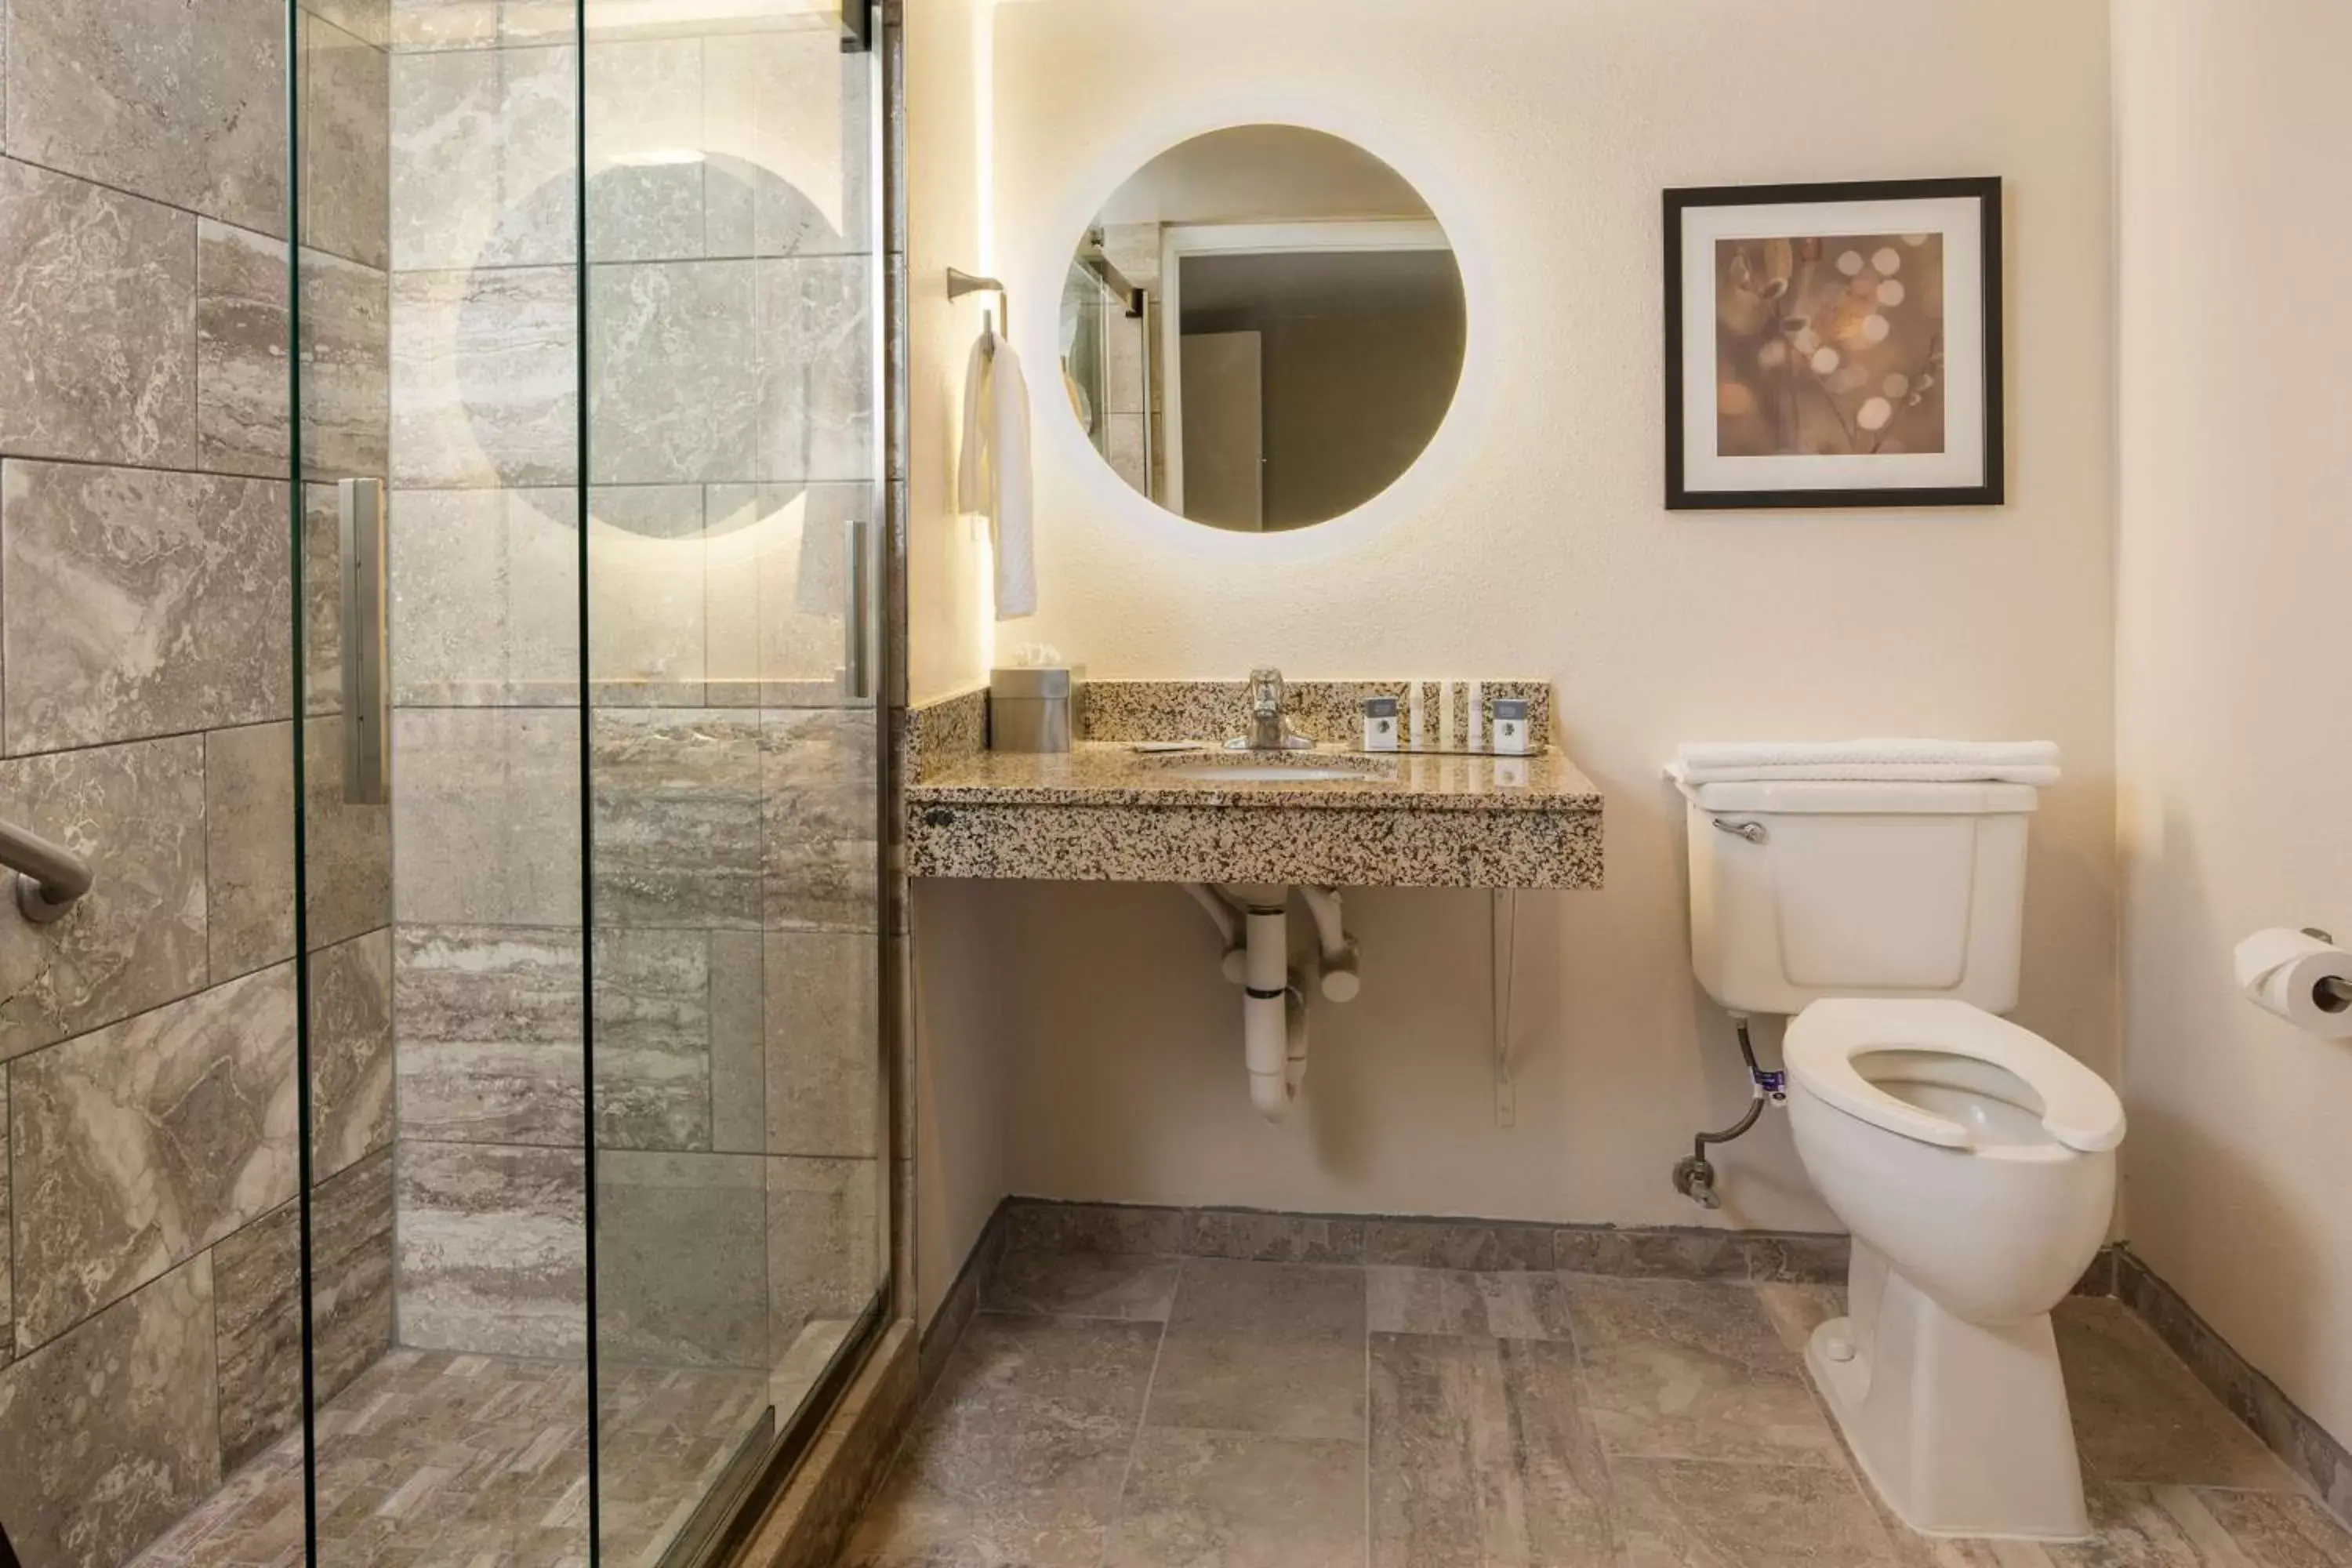 Bathroom in Doubletree by Hilton Laurel, MD